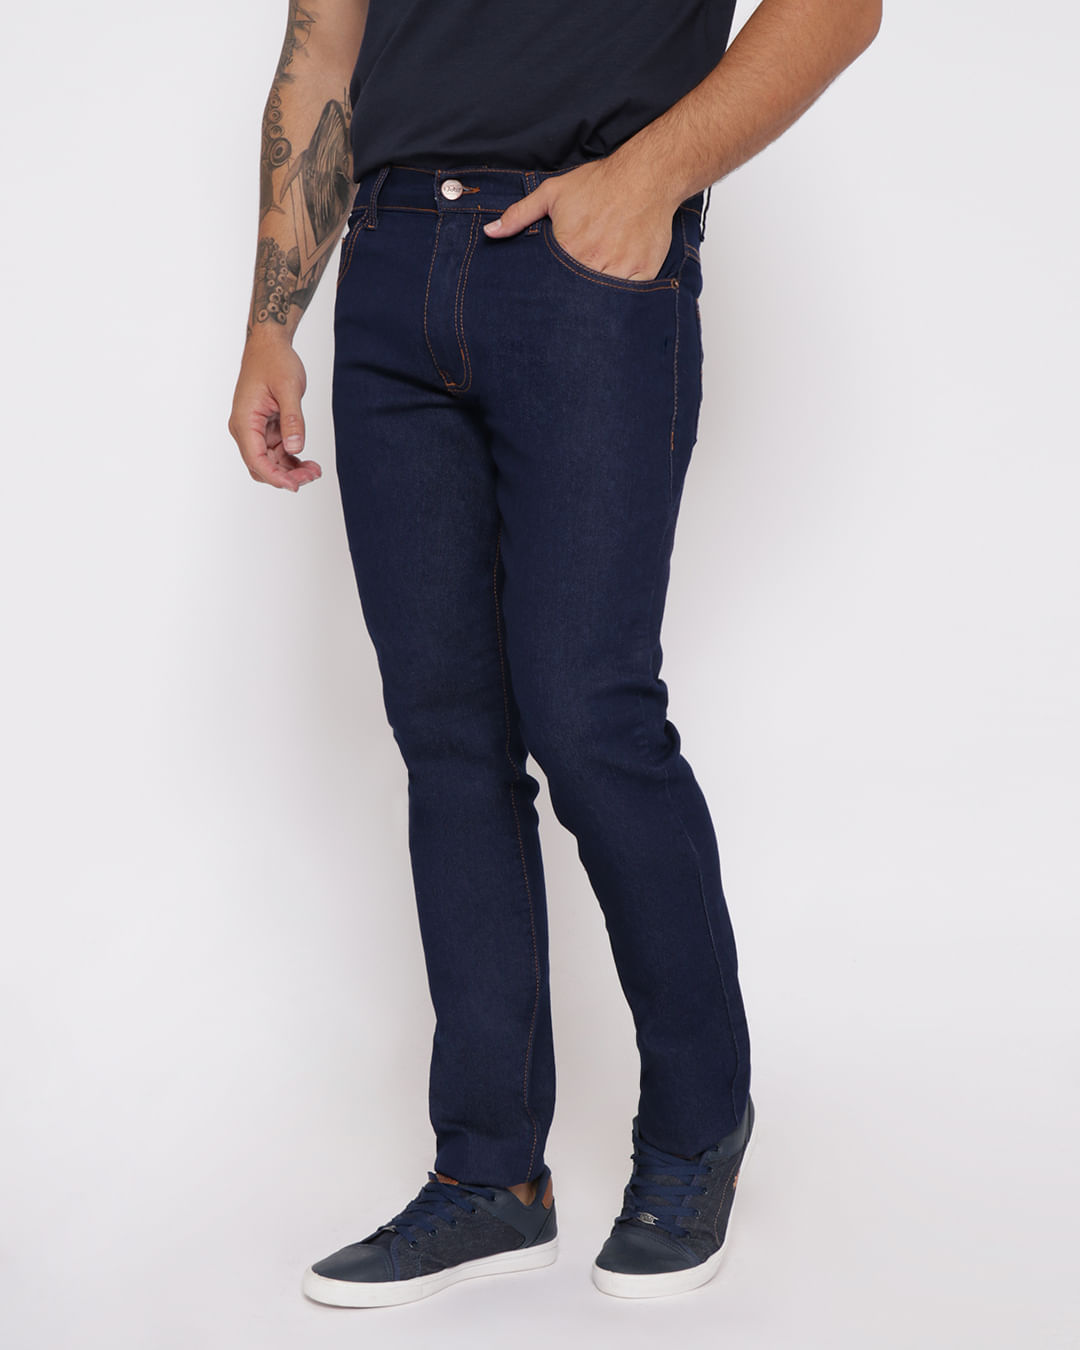 Calça Jeans Masculina Básica Reta Azul